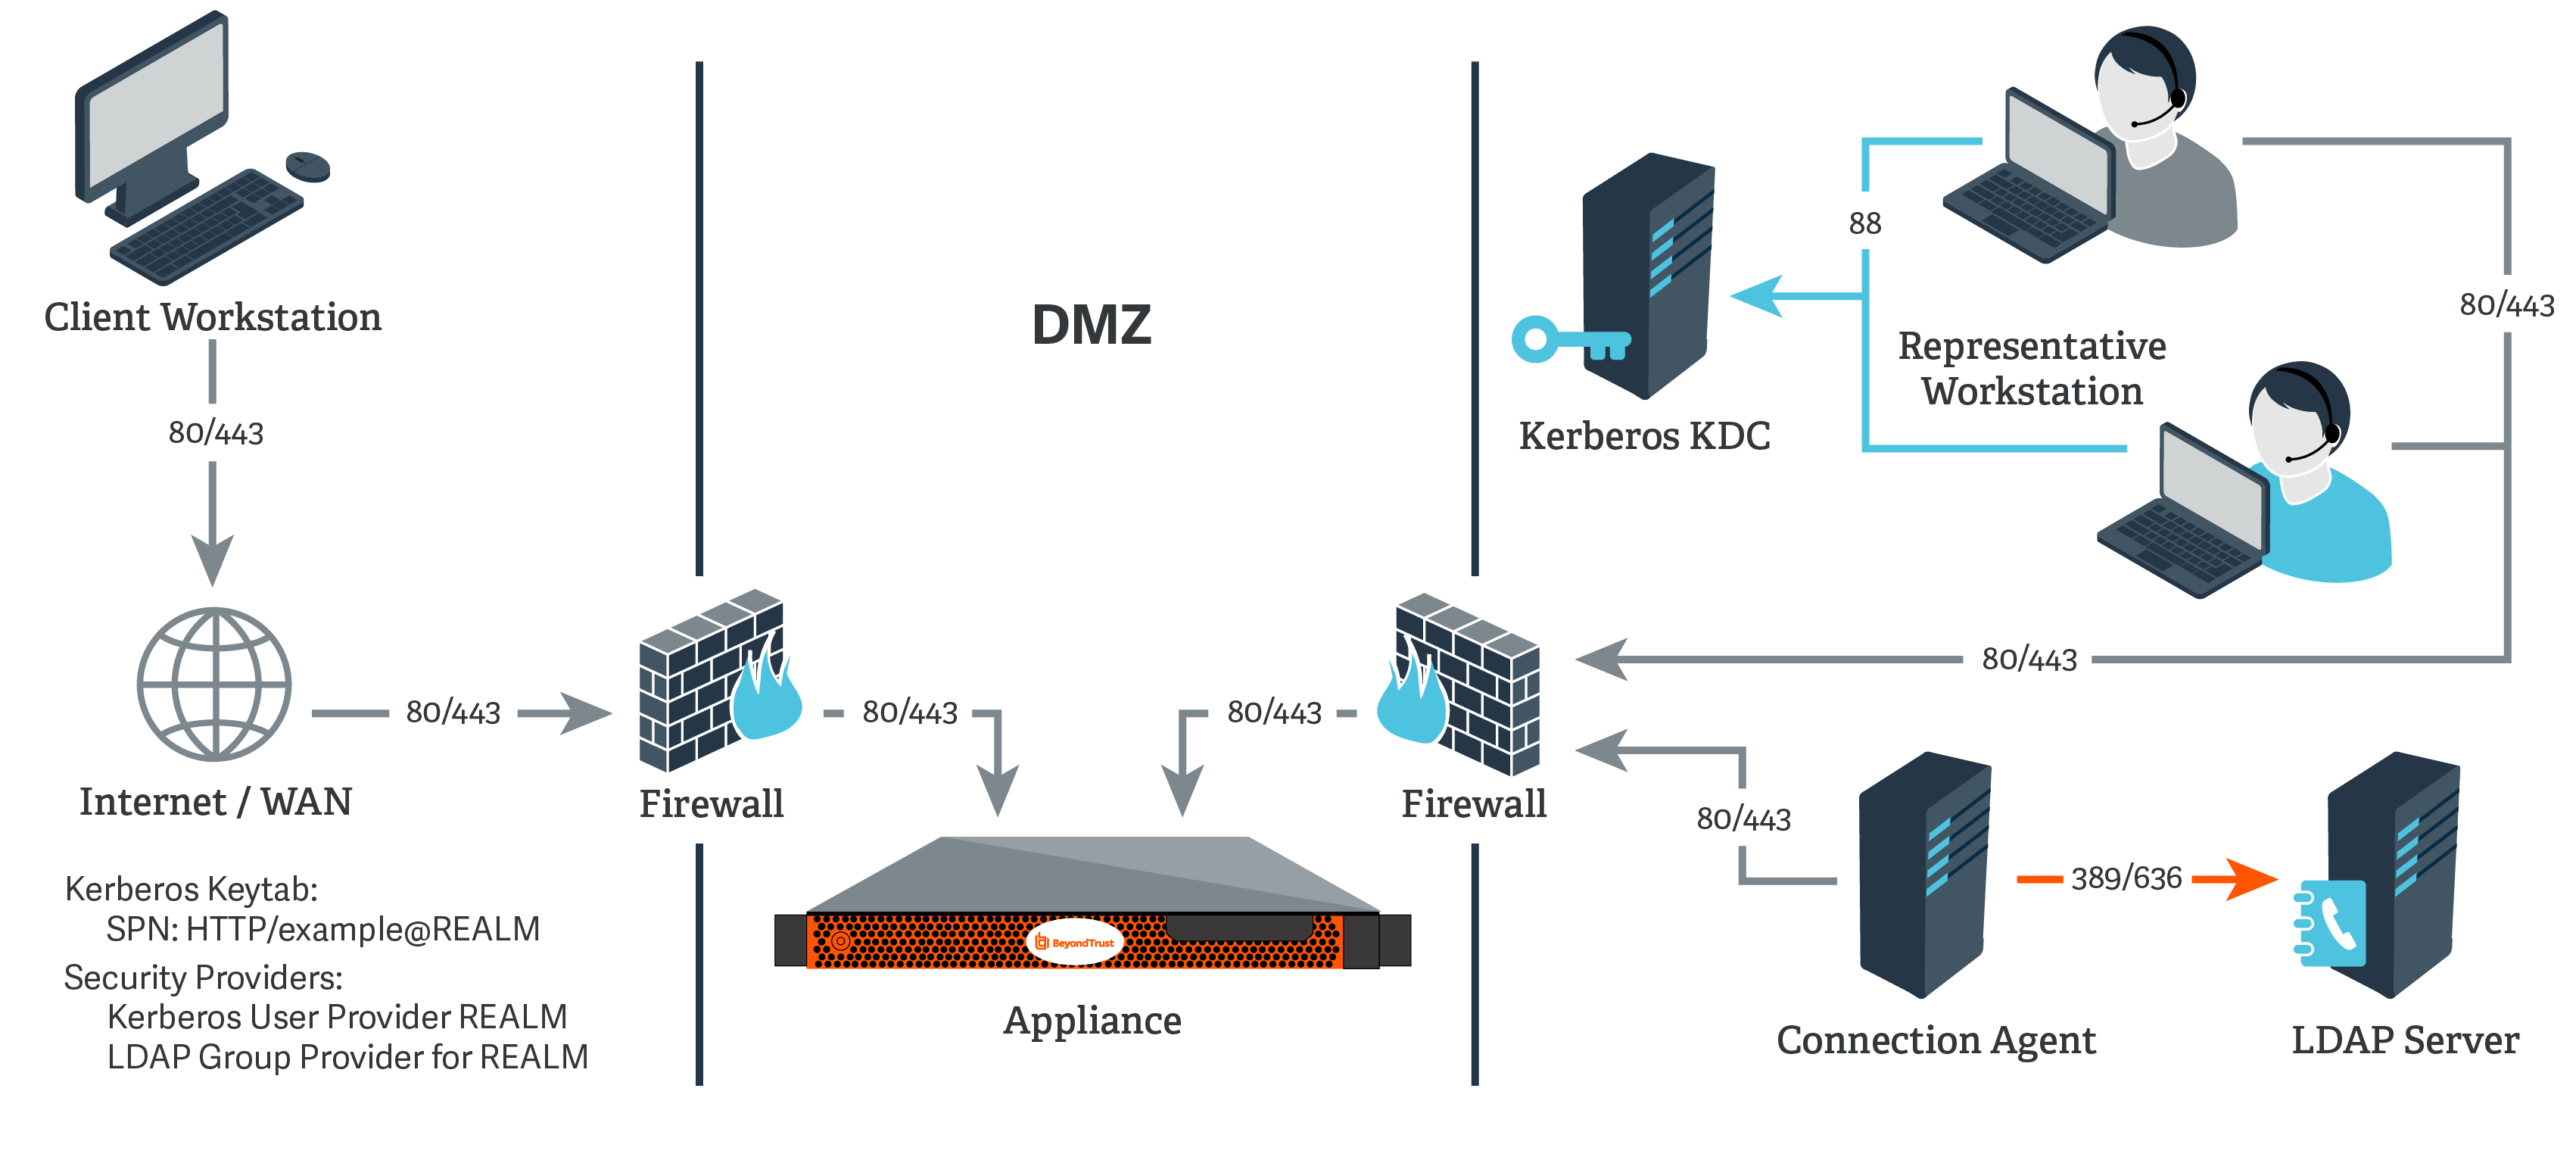 Diagram of Network Setup Example 3: Kerberos KDC and LDAP Server, Separate Networks